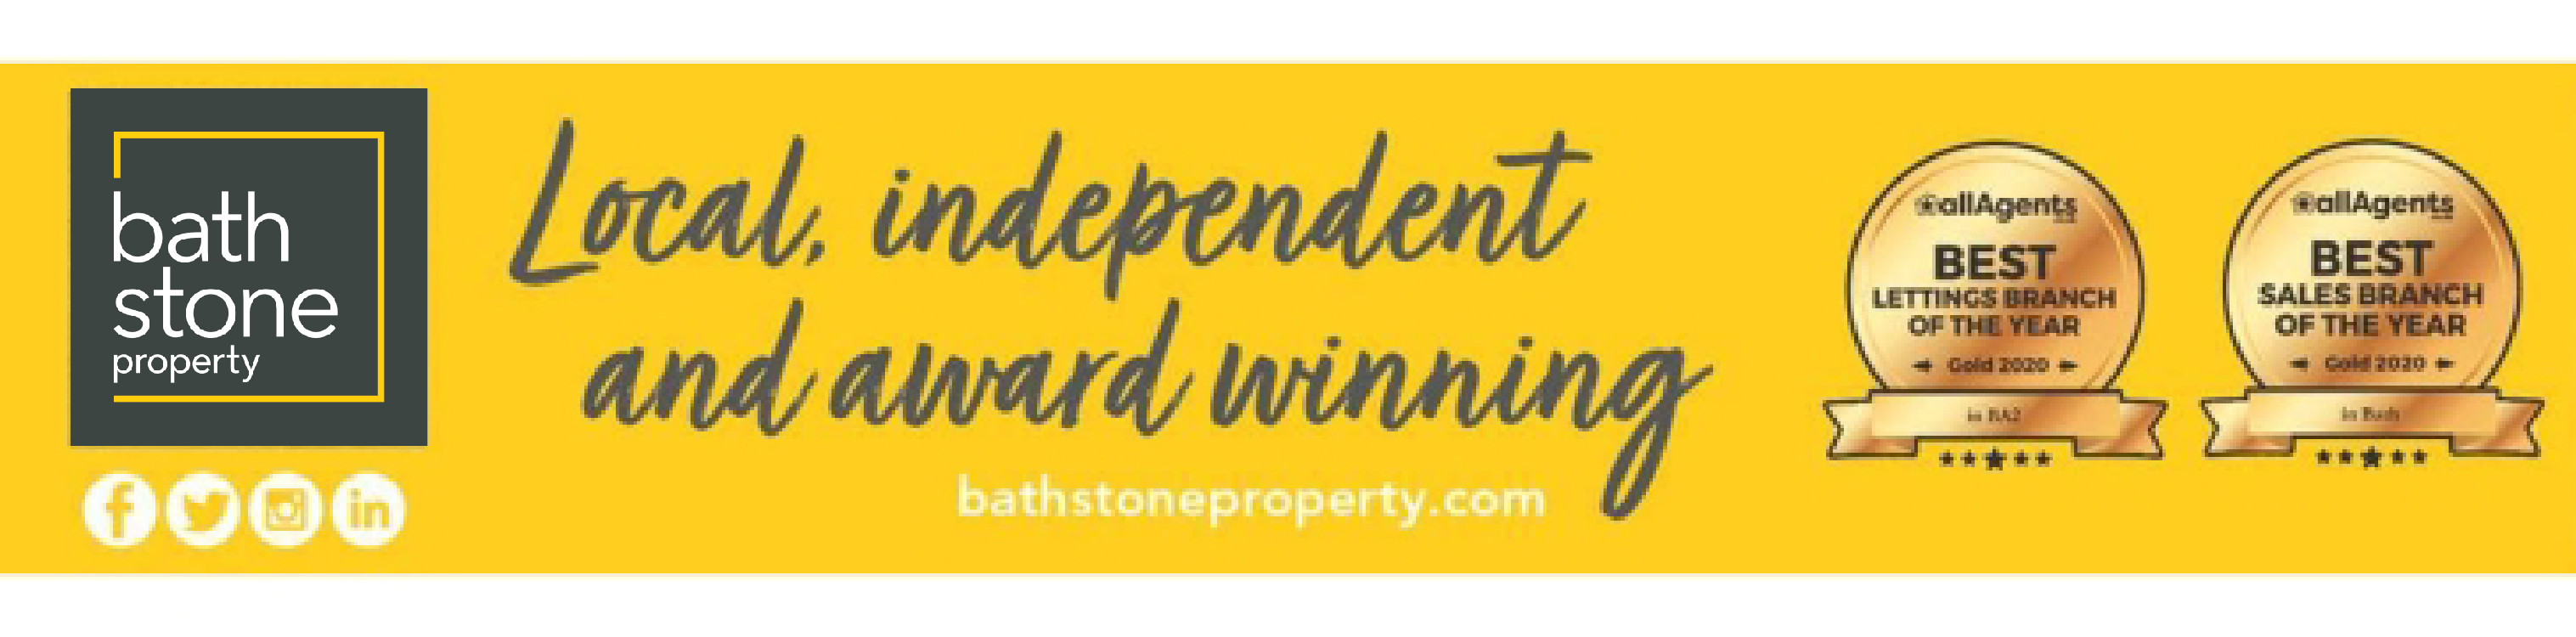 Bath Estate Agents | Estate Agent Bath | bathstoneproperty.com